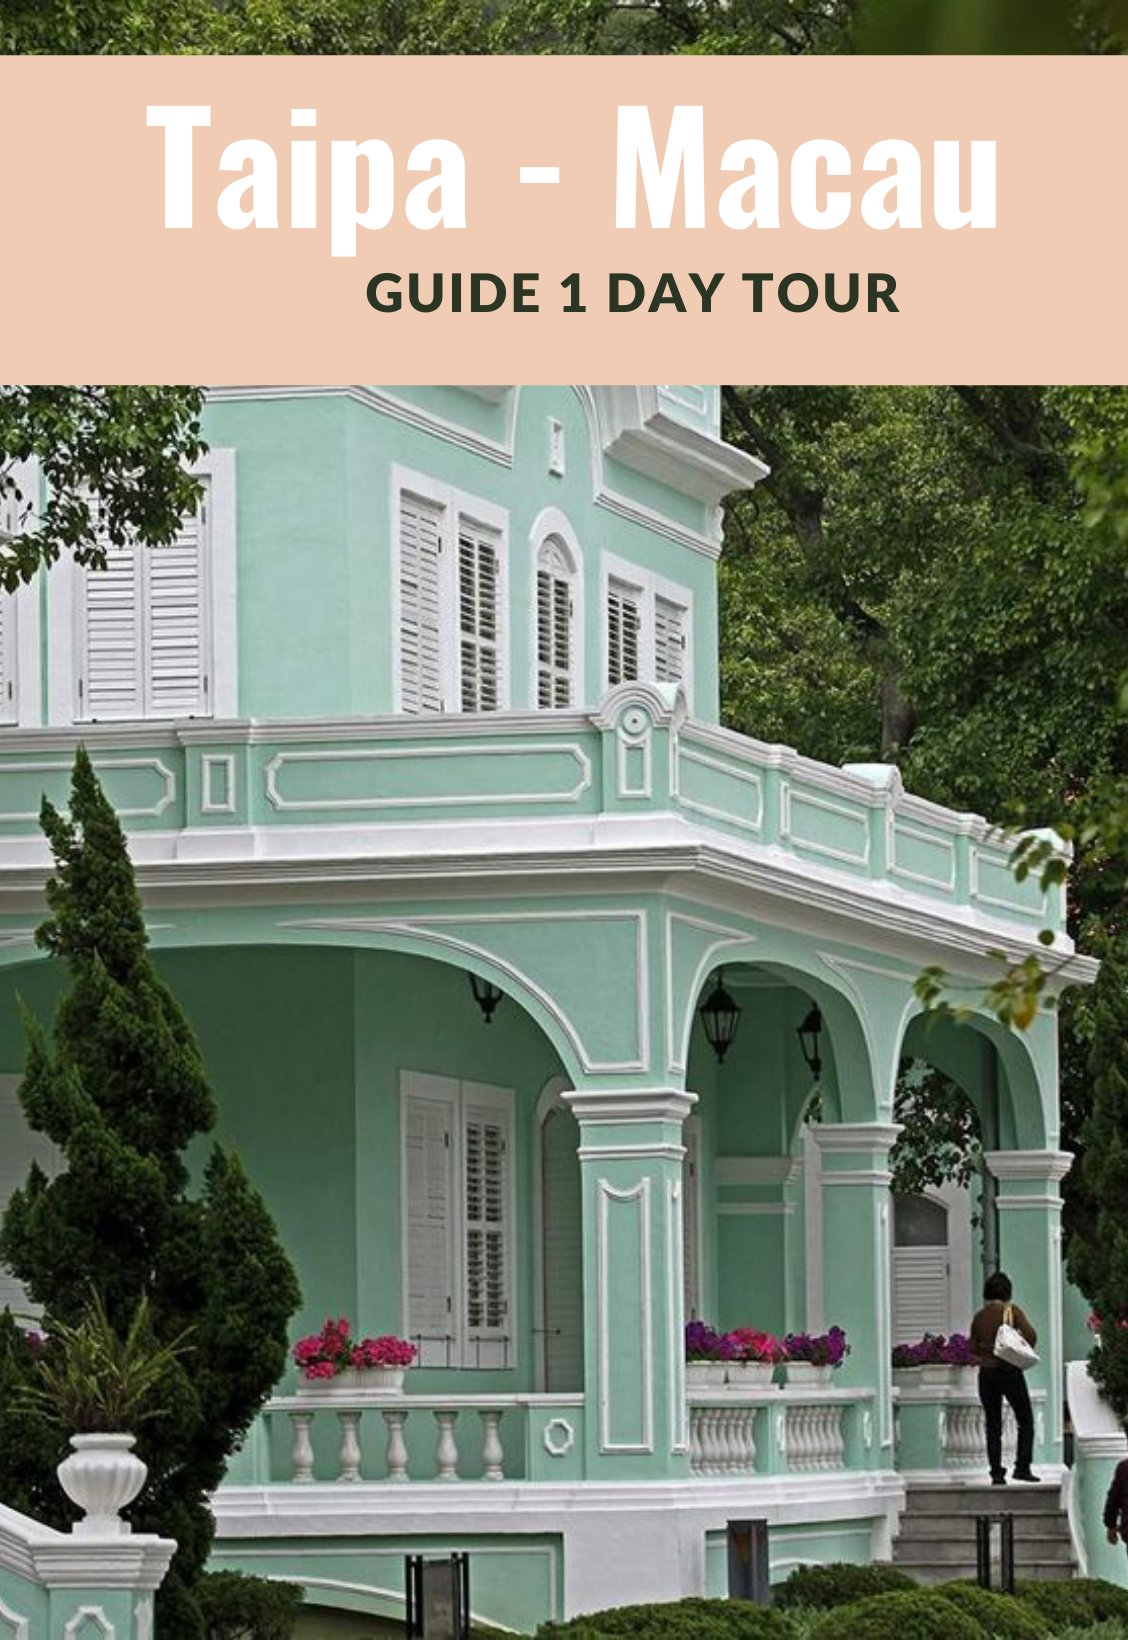 Guide 1 day tour in Taipa - Macau